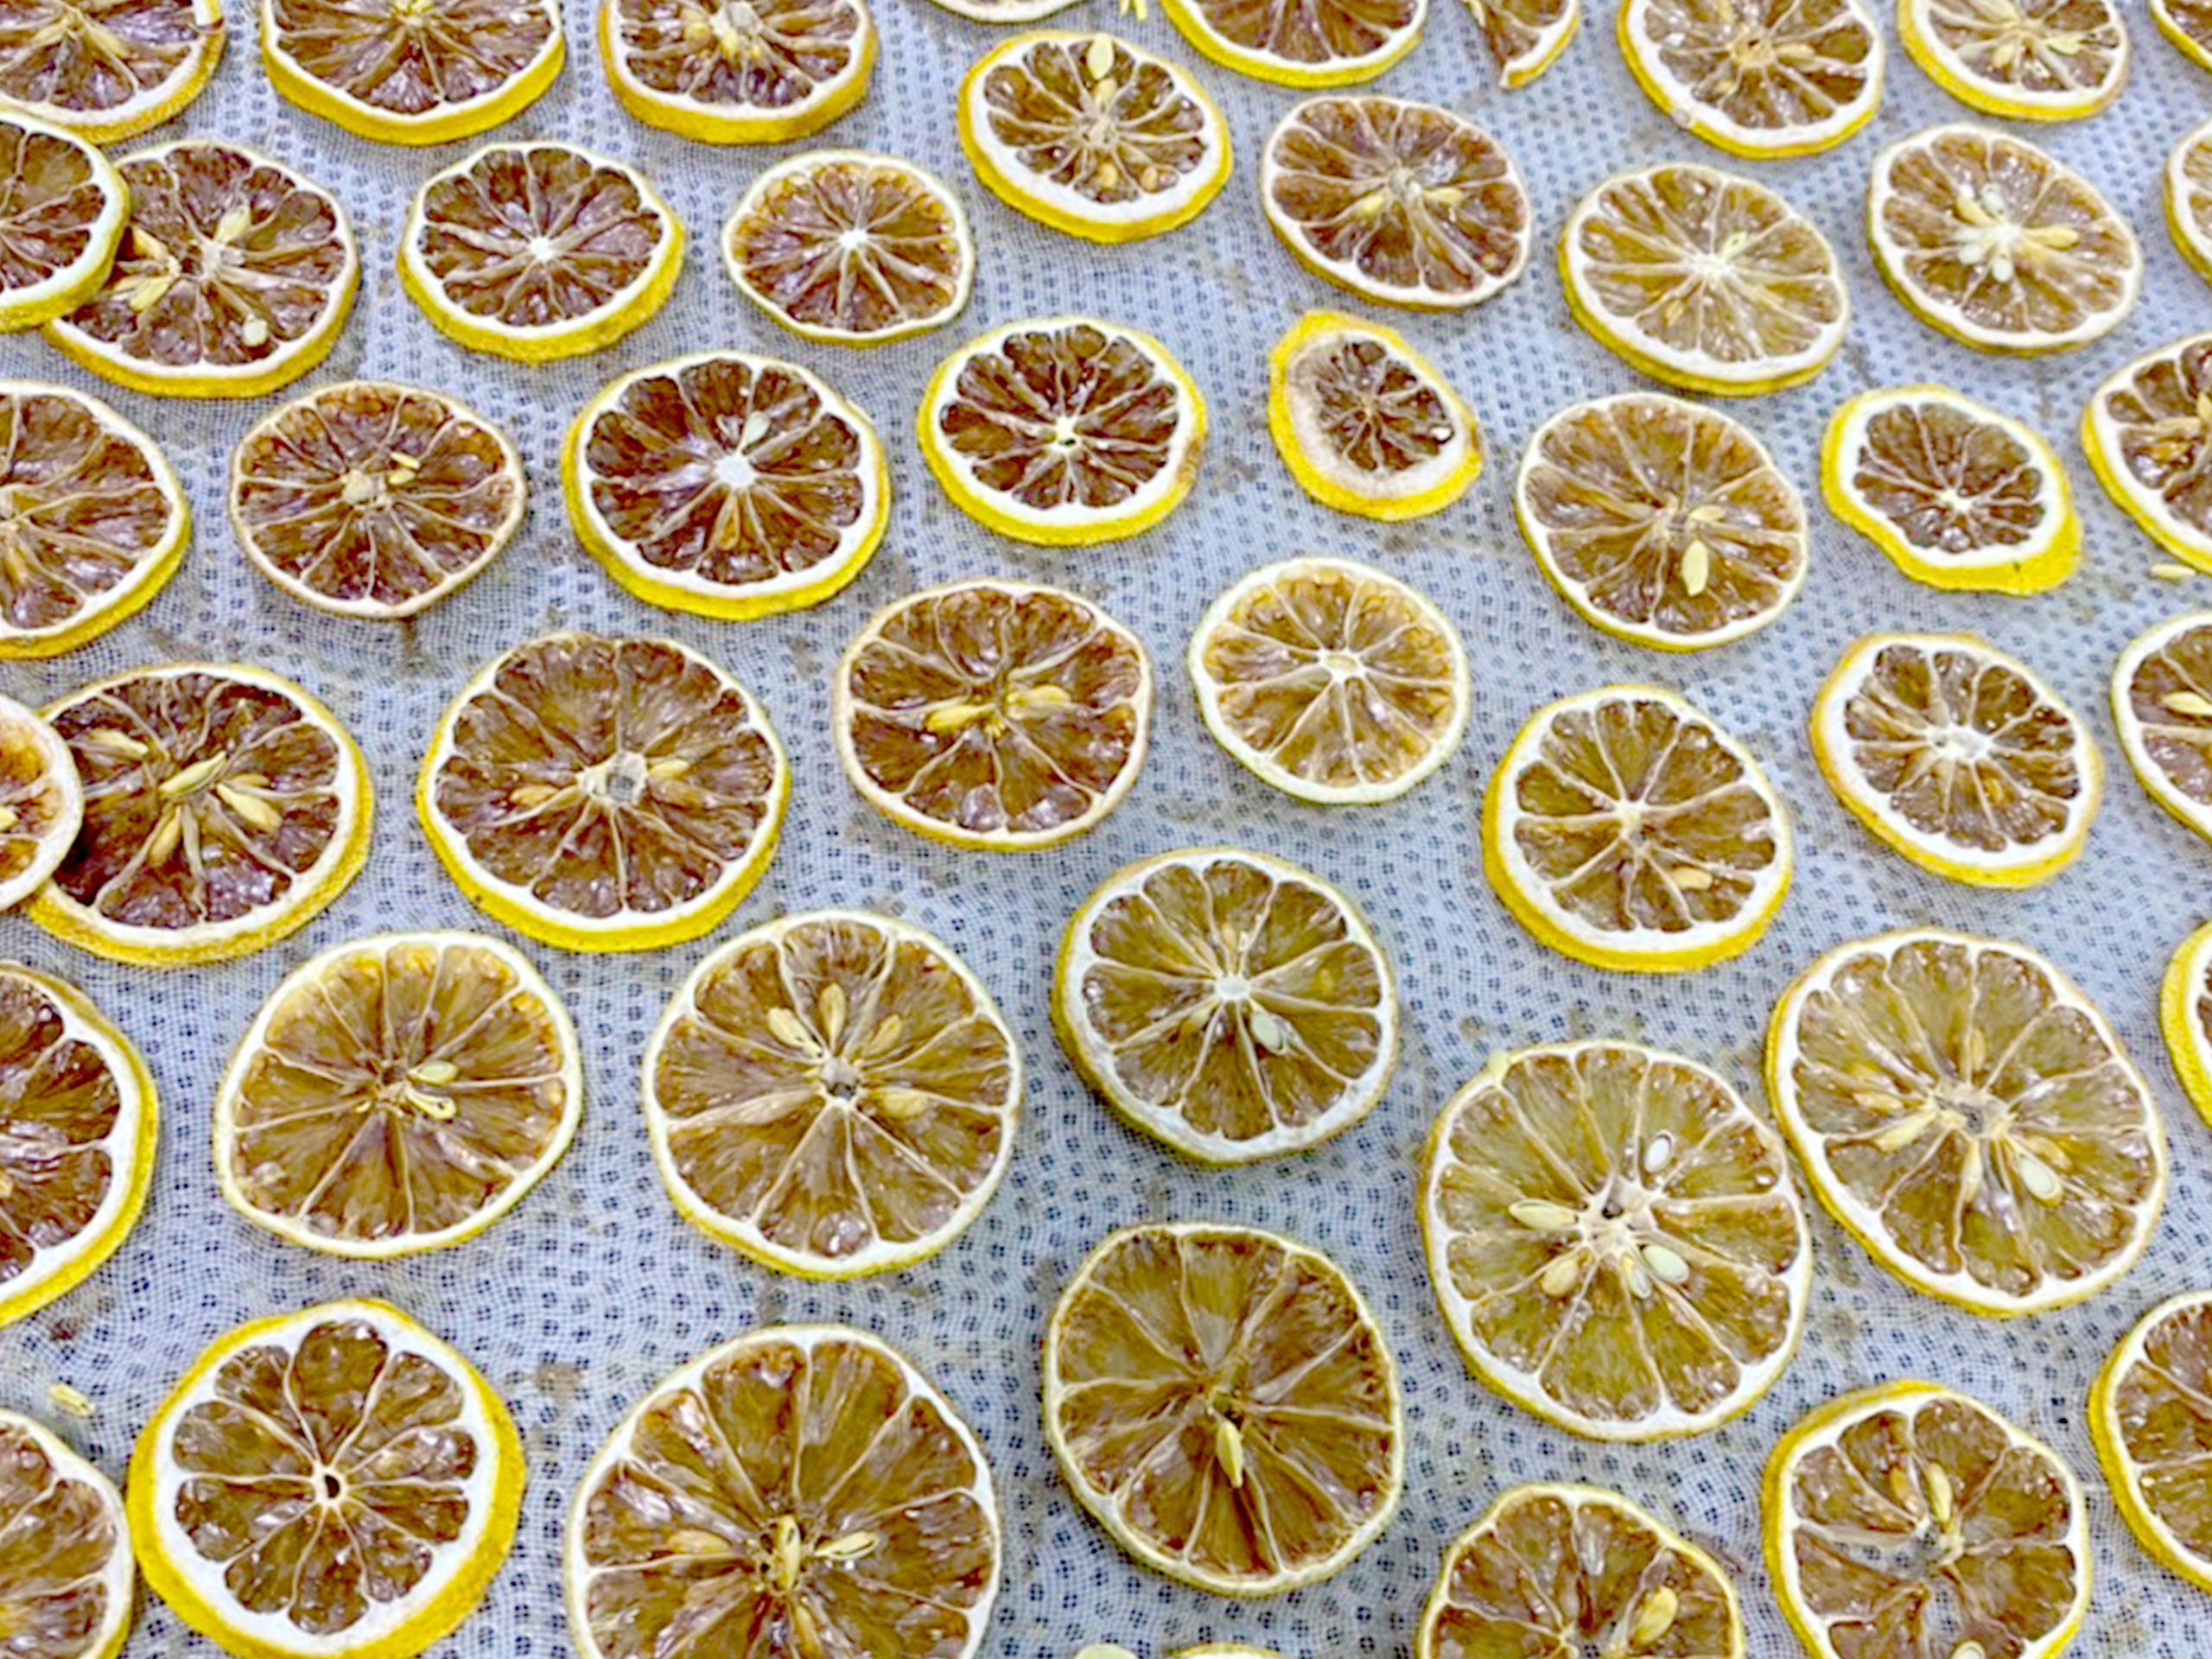 Classification lemon in cheerfarm, premium dried fruits